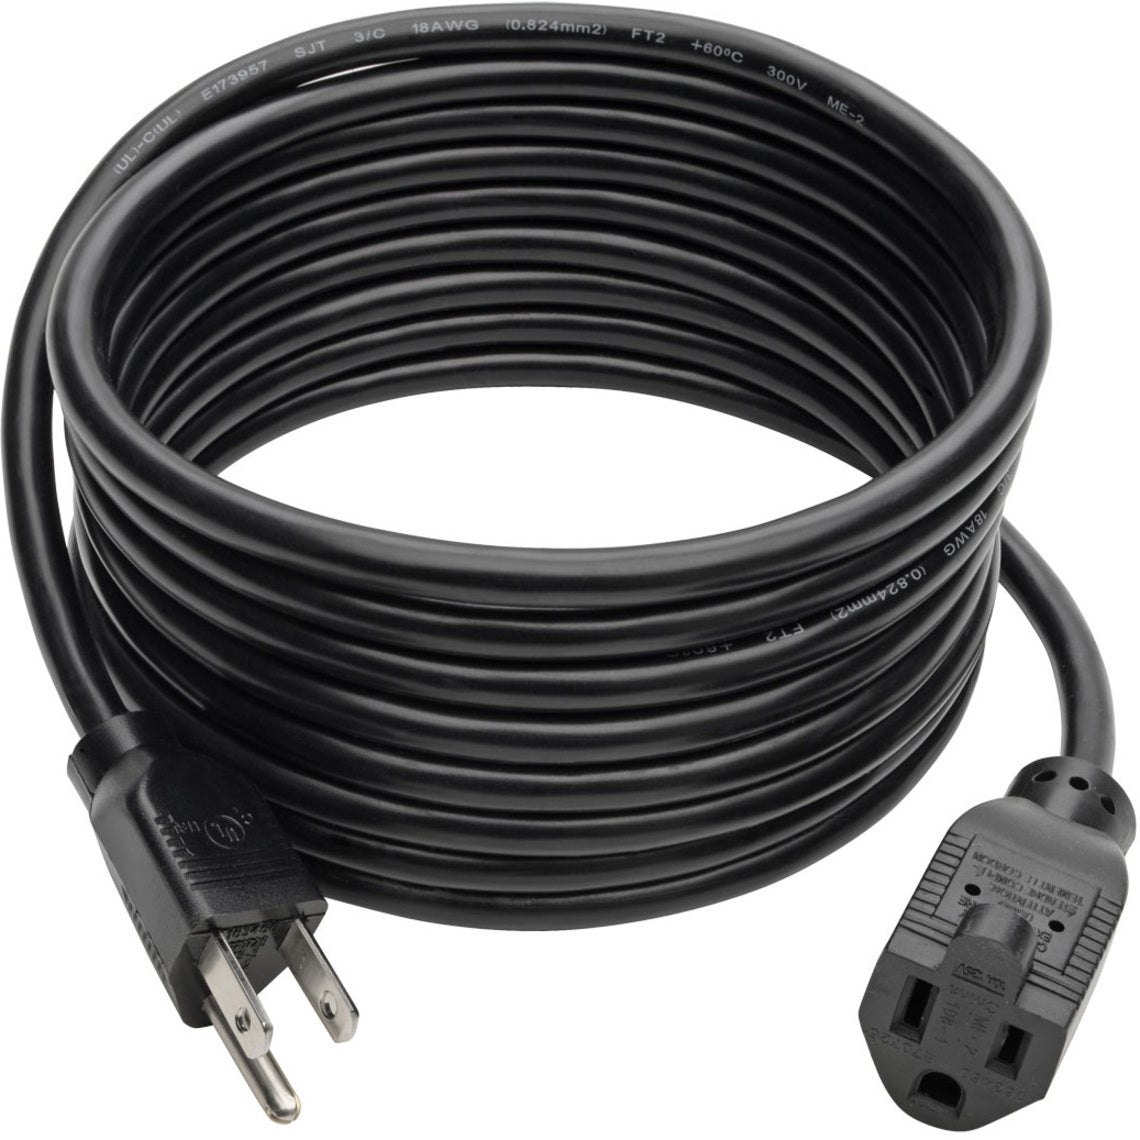 Tripp Lite P022-012 Power Extension Cord, 12 ft, 10A, 120V AC, Black